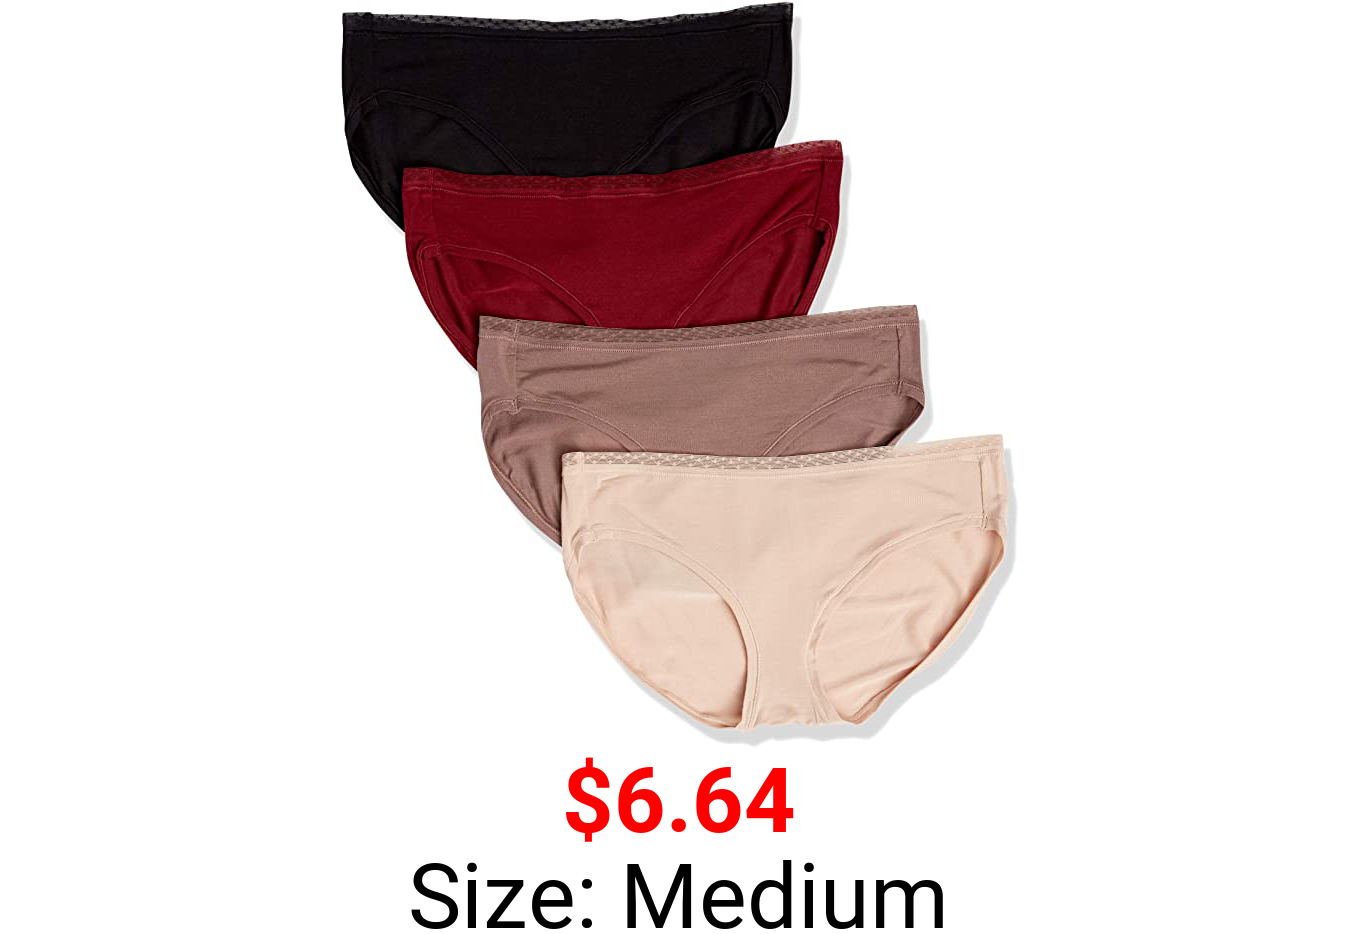 Amazon Essentials Women's 4-Pack Modal Bikini Underwear